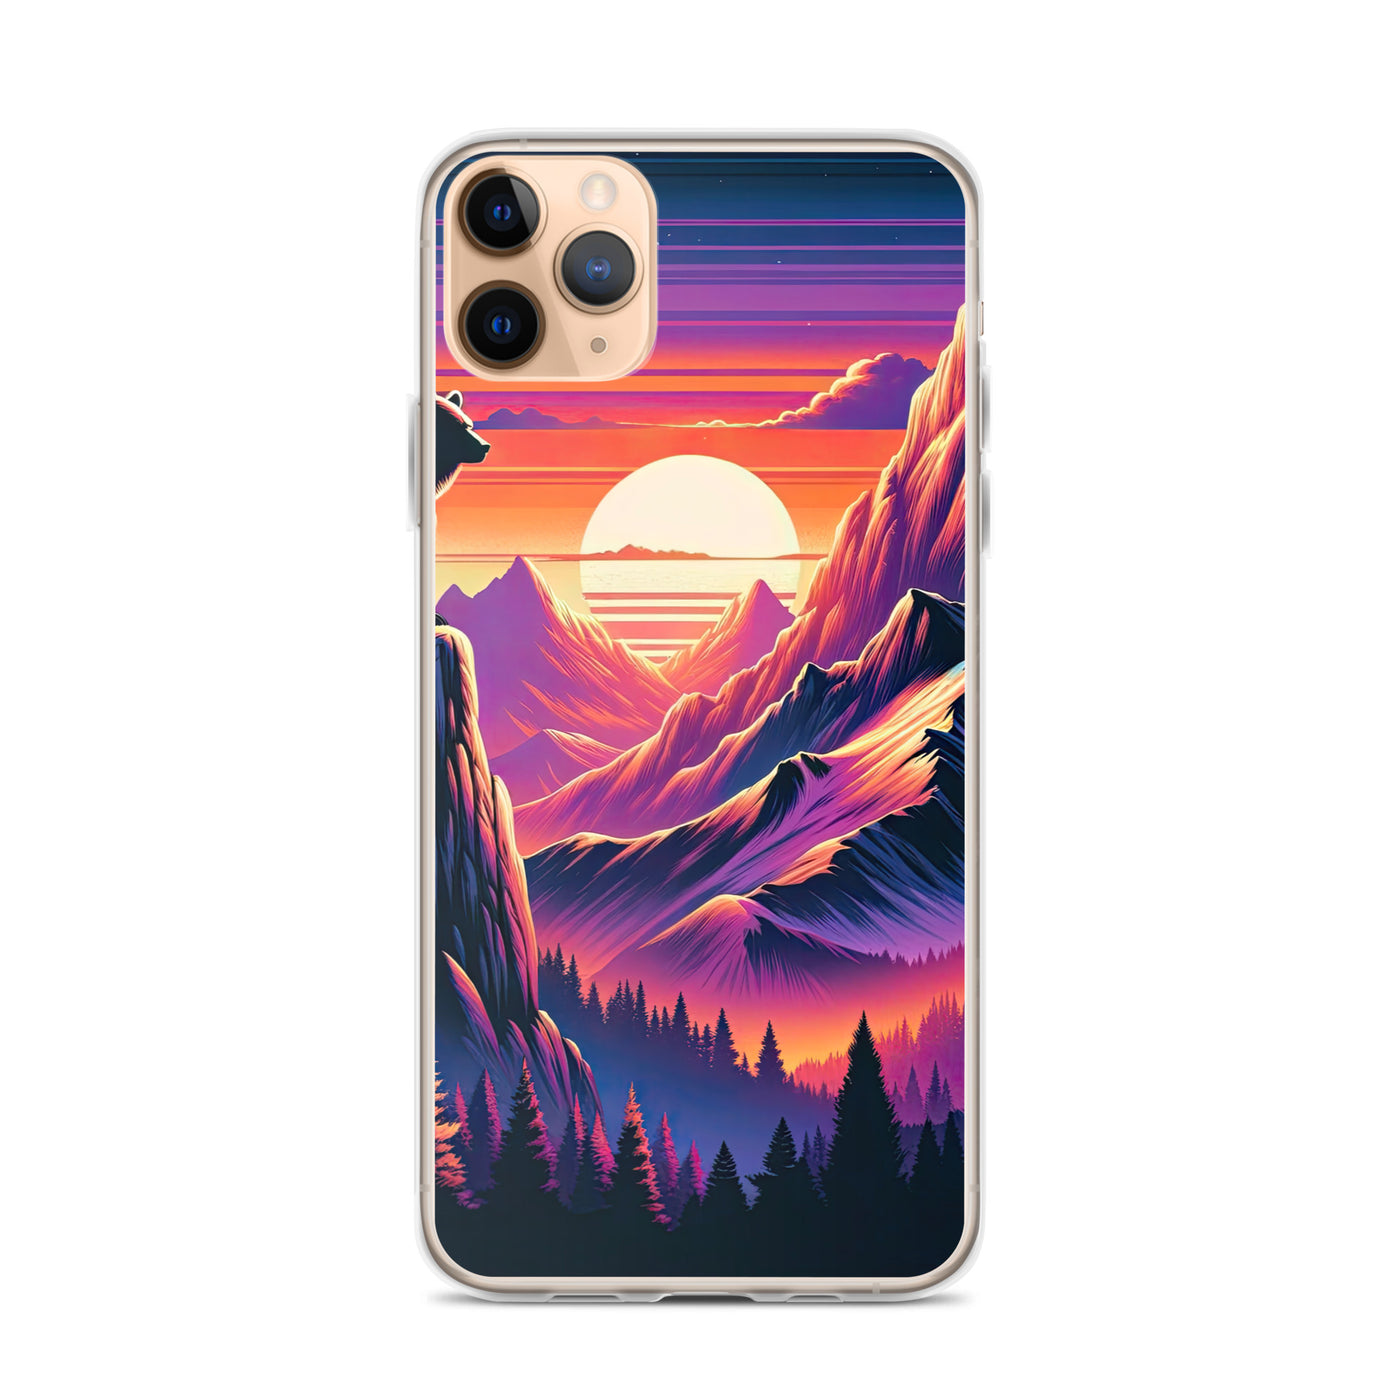 Alpen-Sonnenuntergang mit Bär auf Hügel, warmes Himmelsfarbenspiel - iPhone Schutzhülle (durchsichtig) camping xxx yyy zzz iPhone 11 Pro Max